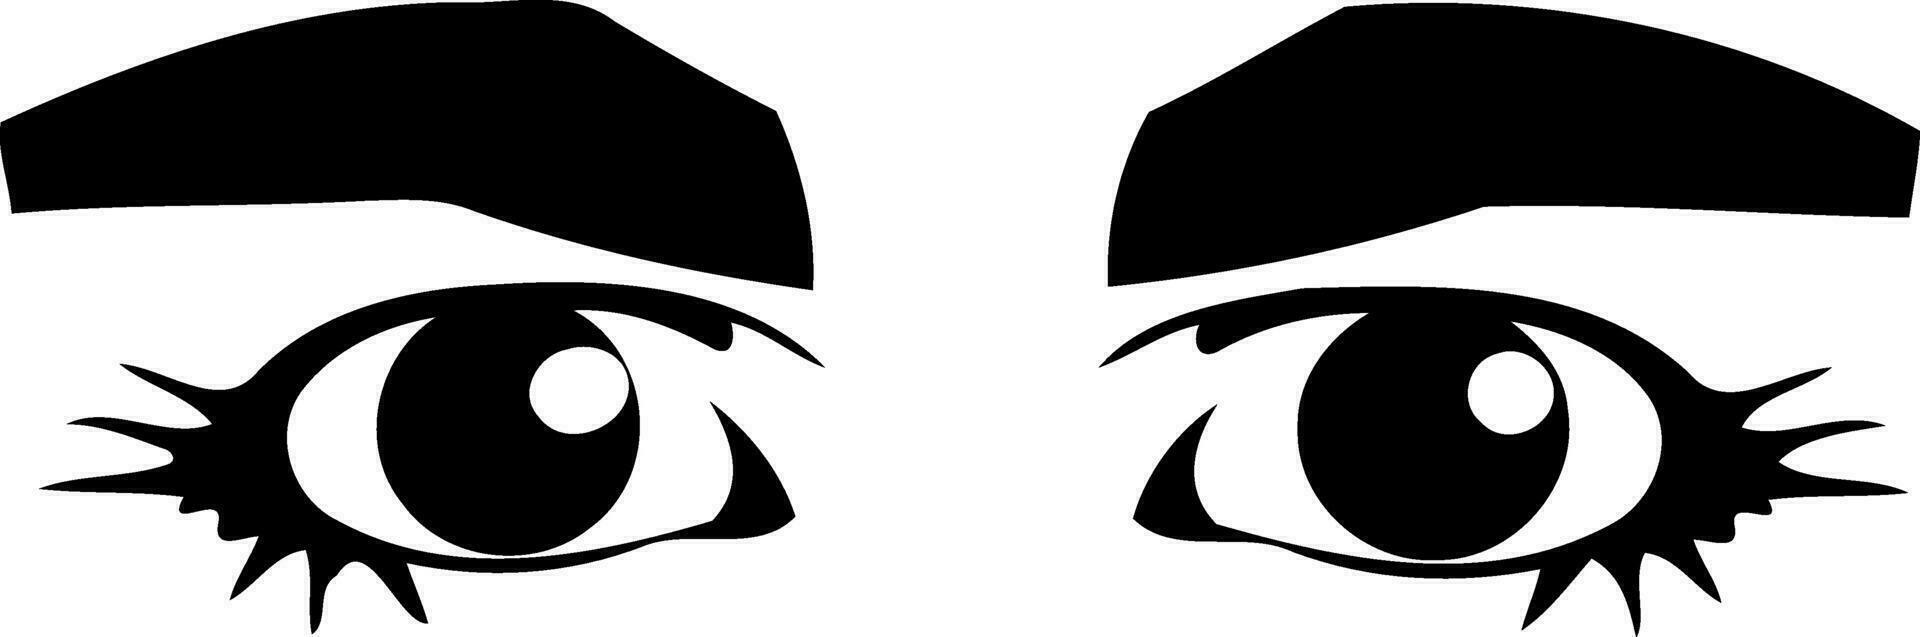 humano olhos dentro Preto e branco vetor